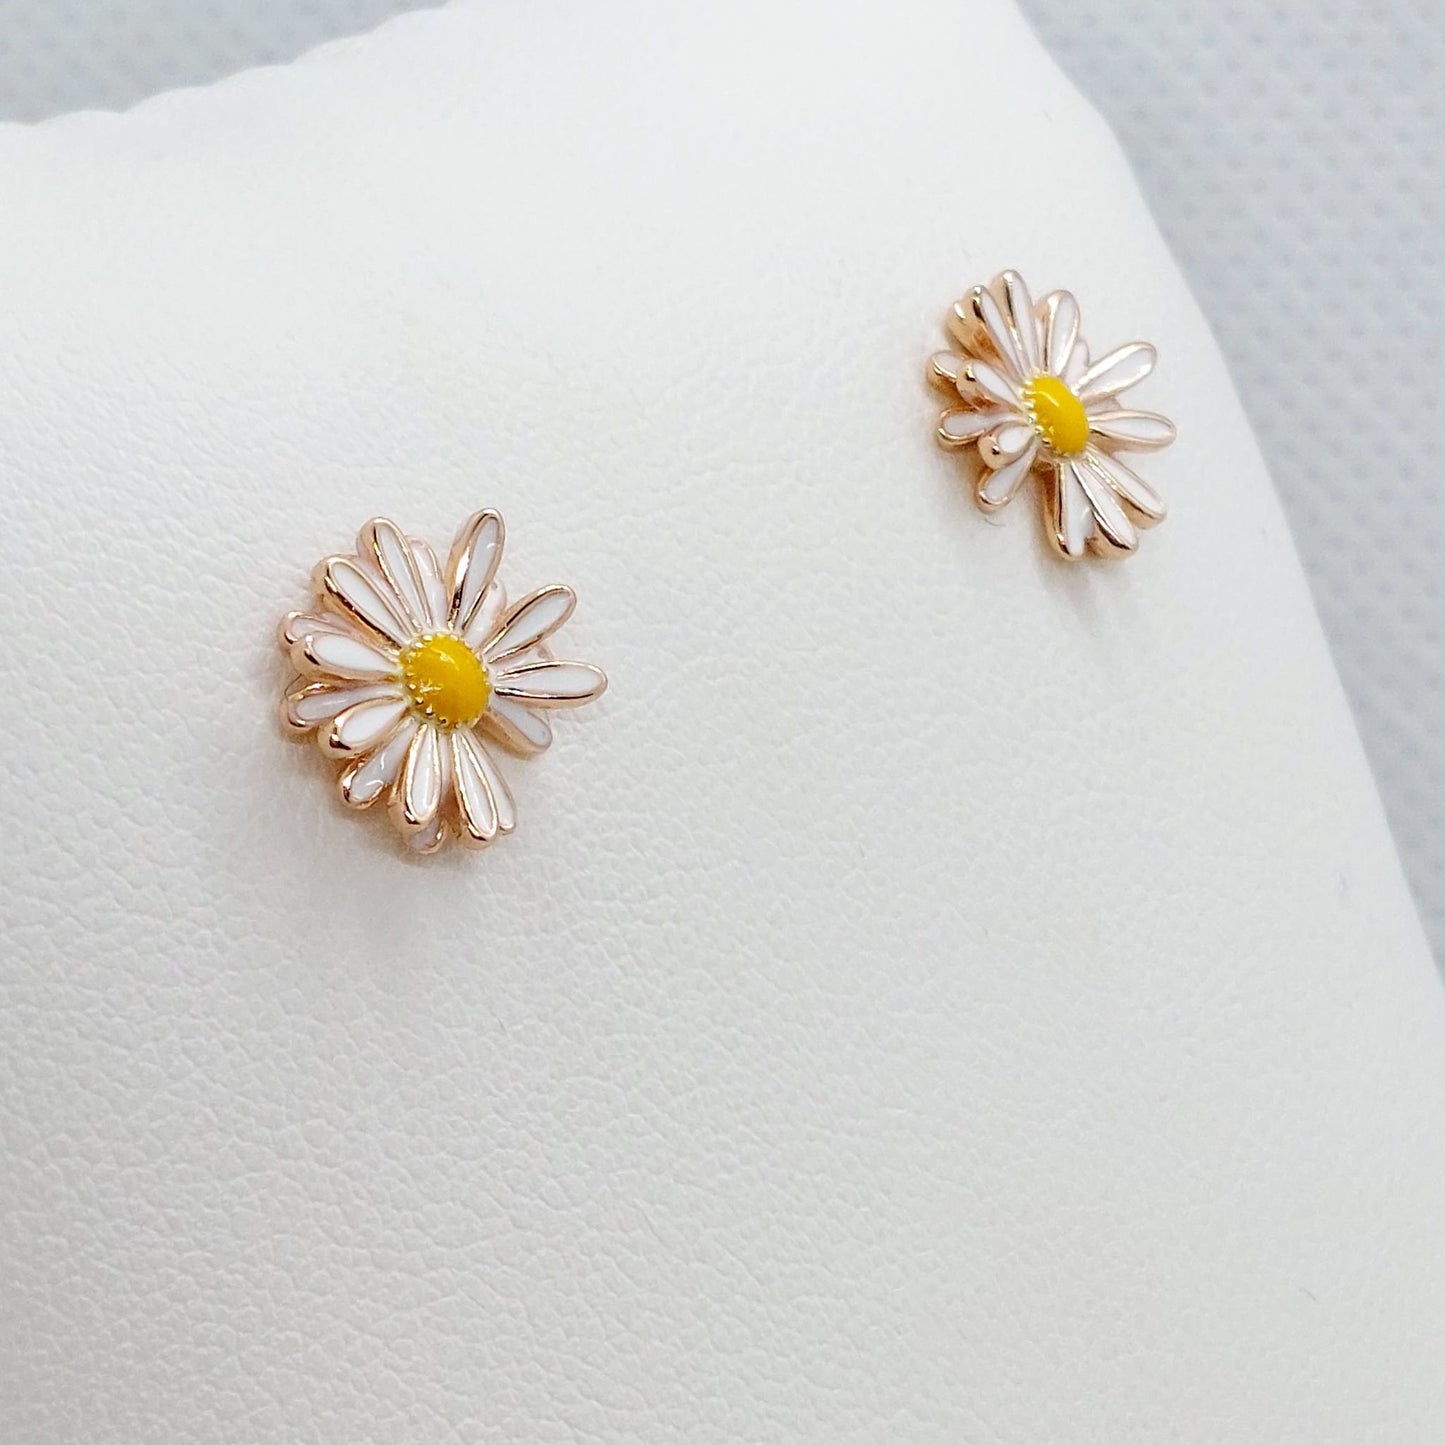 Daisy Flower Stud Earrings - Sterling Silver Rose Gold Plated